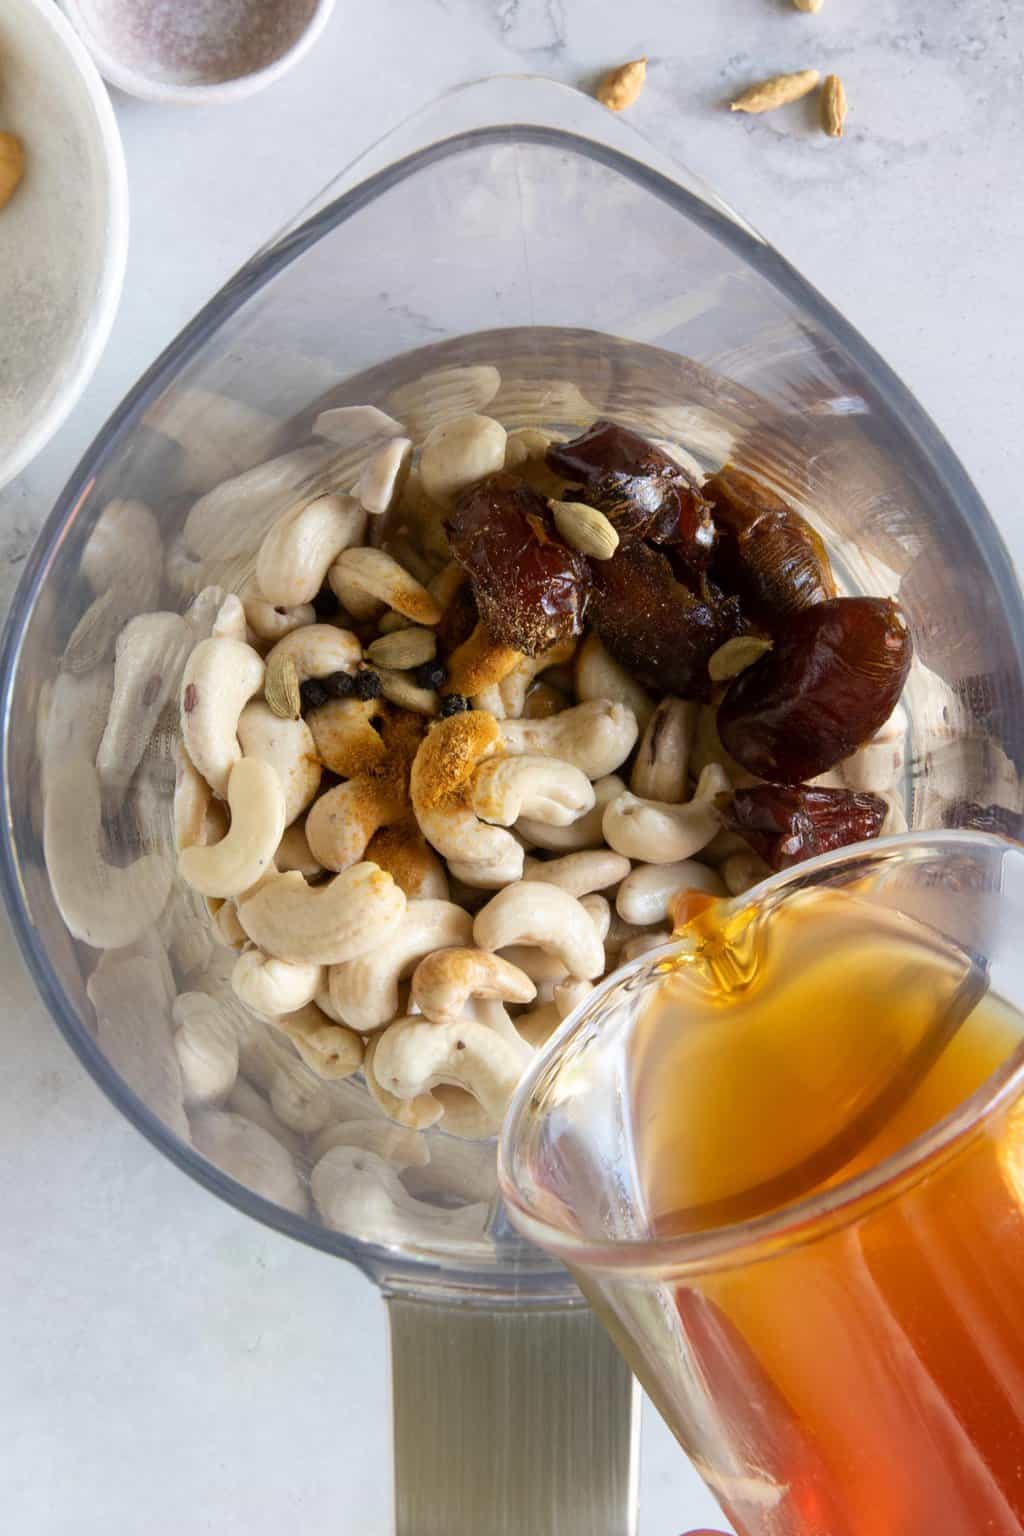 Blend cashews, black tea and spices to make chai spiced milk